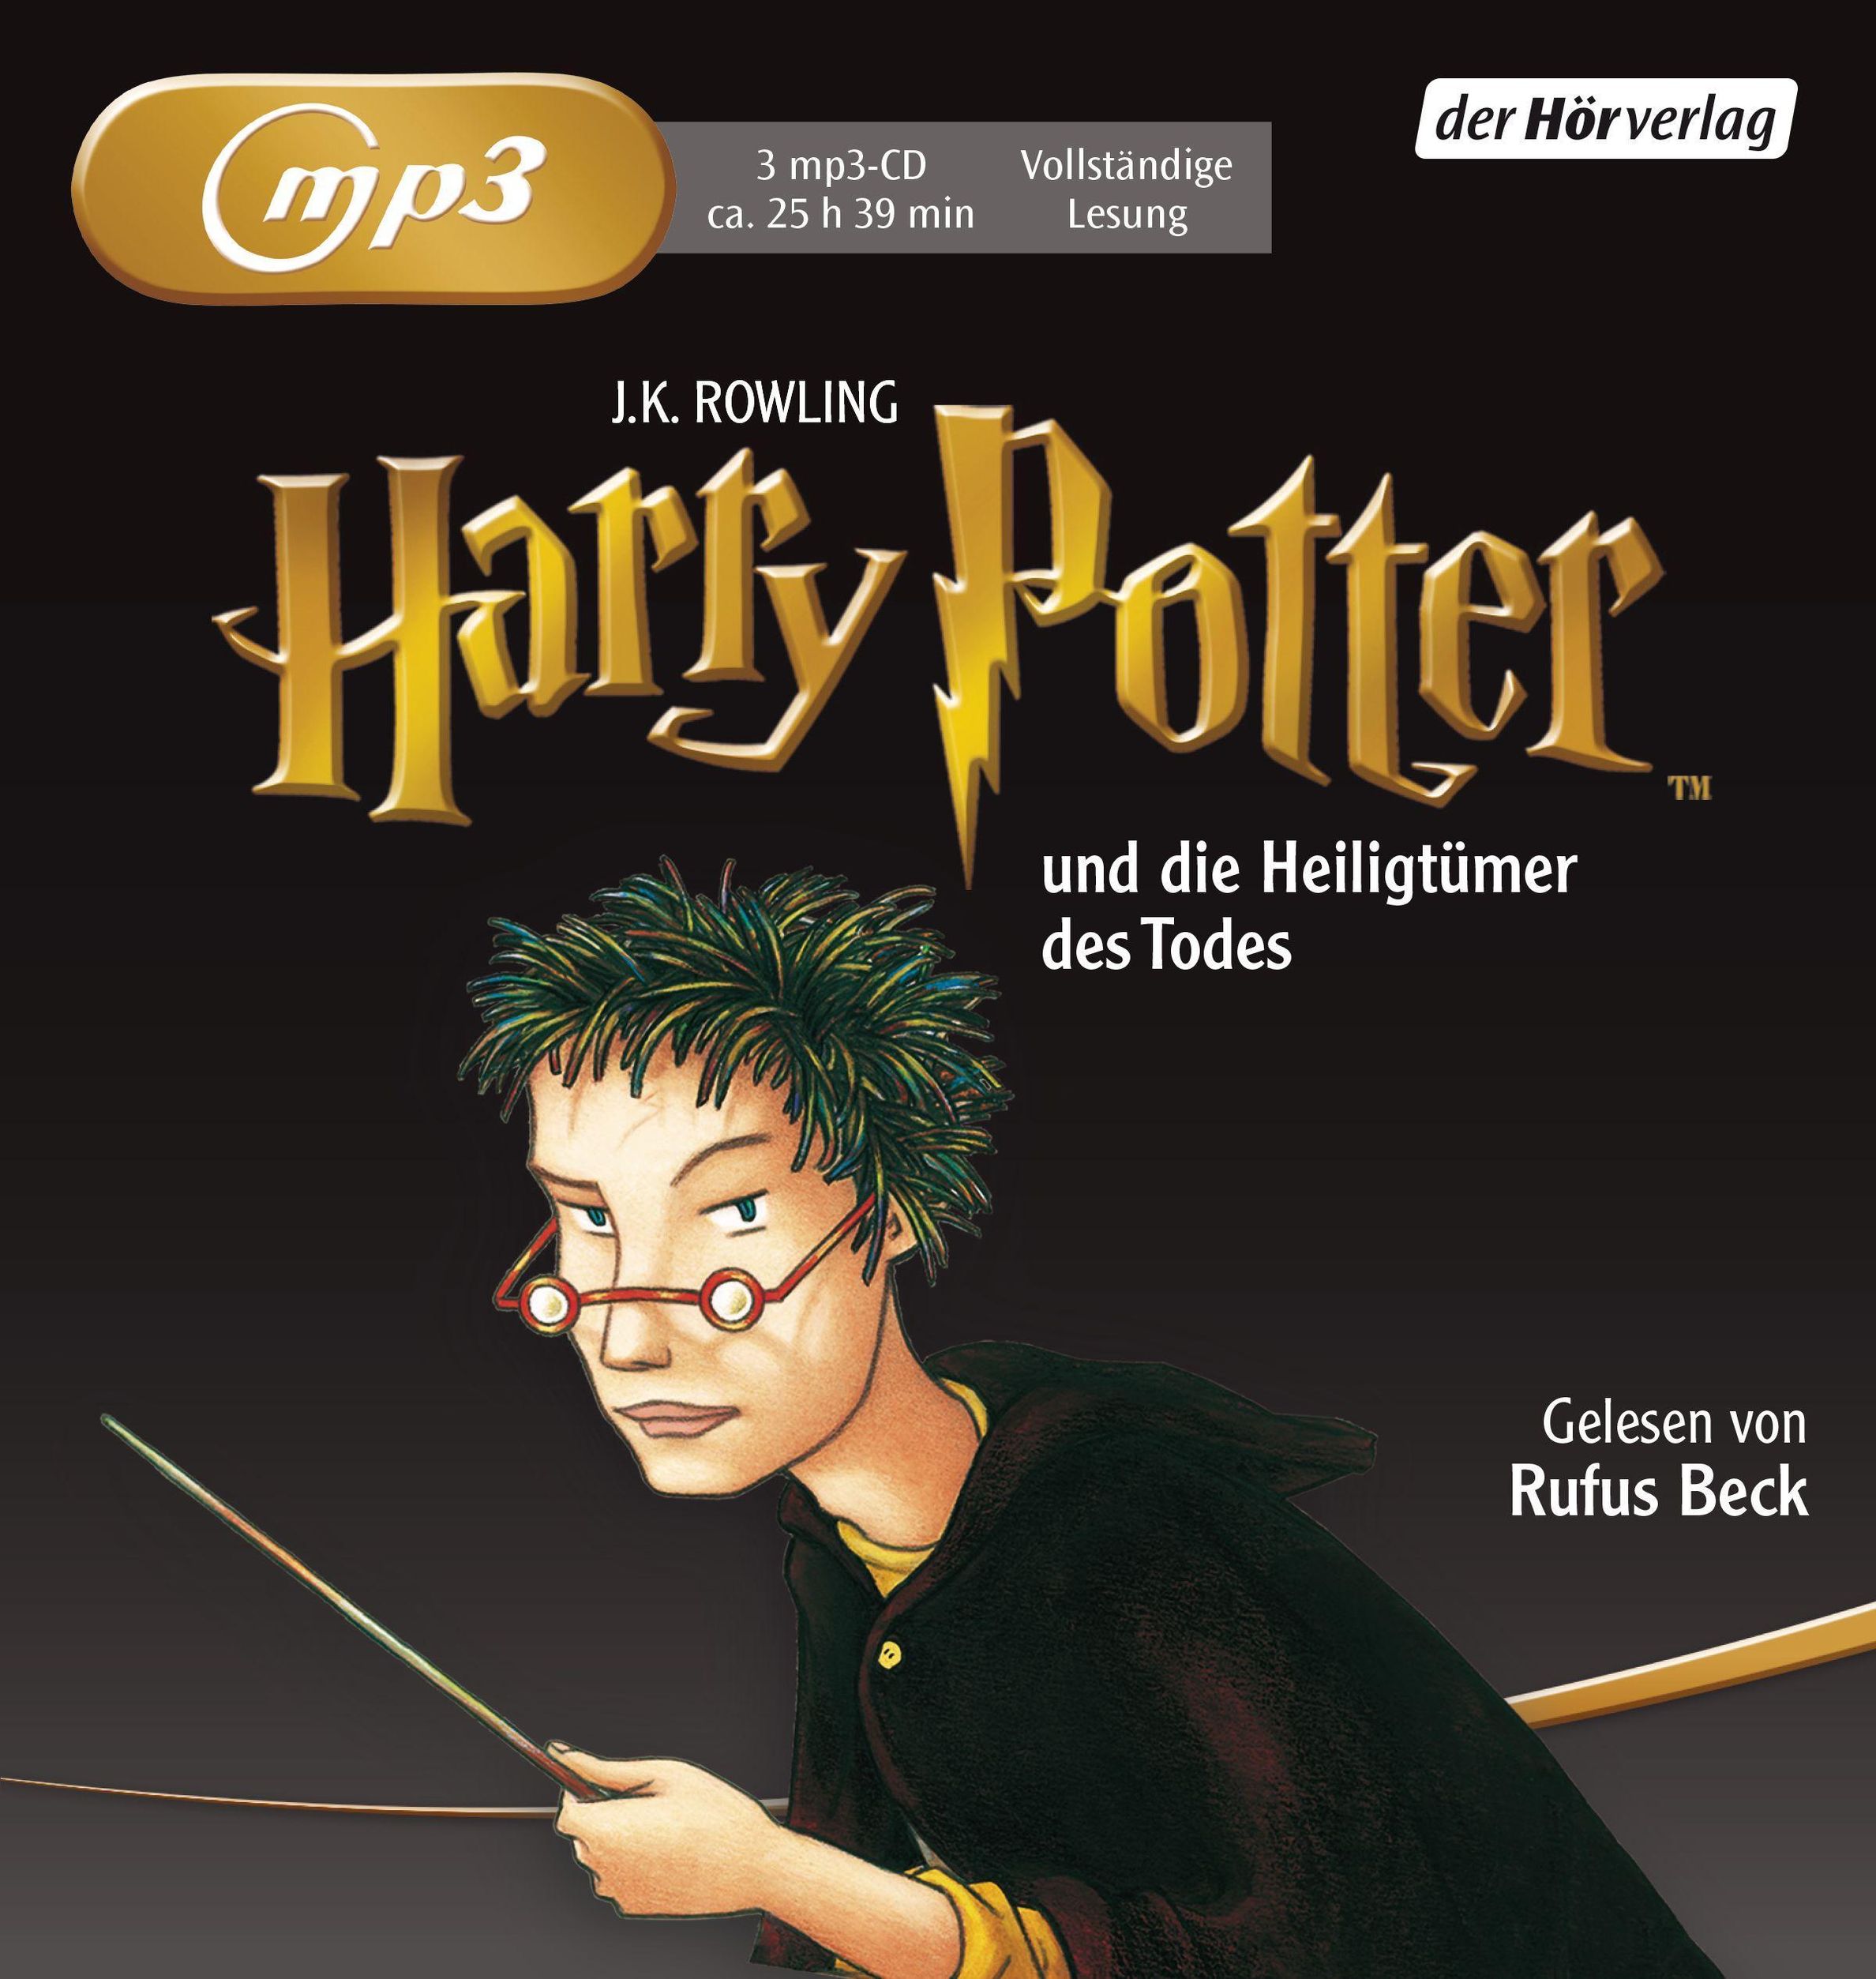 Harry Potter, die komplette Hörbuch-Edition Hörbuch - Weltbild.ch